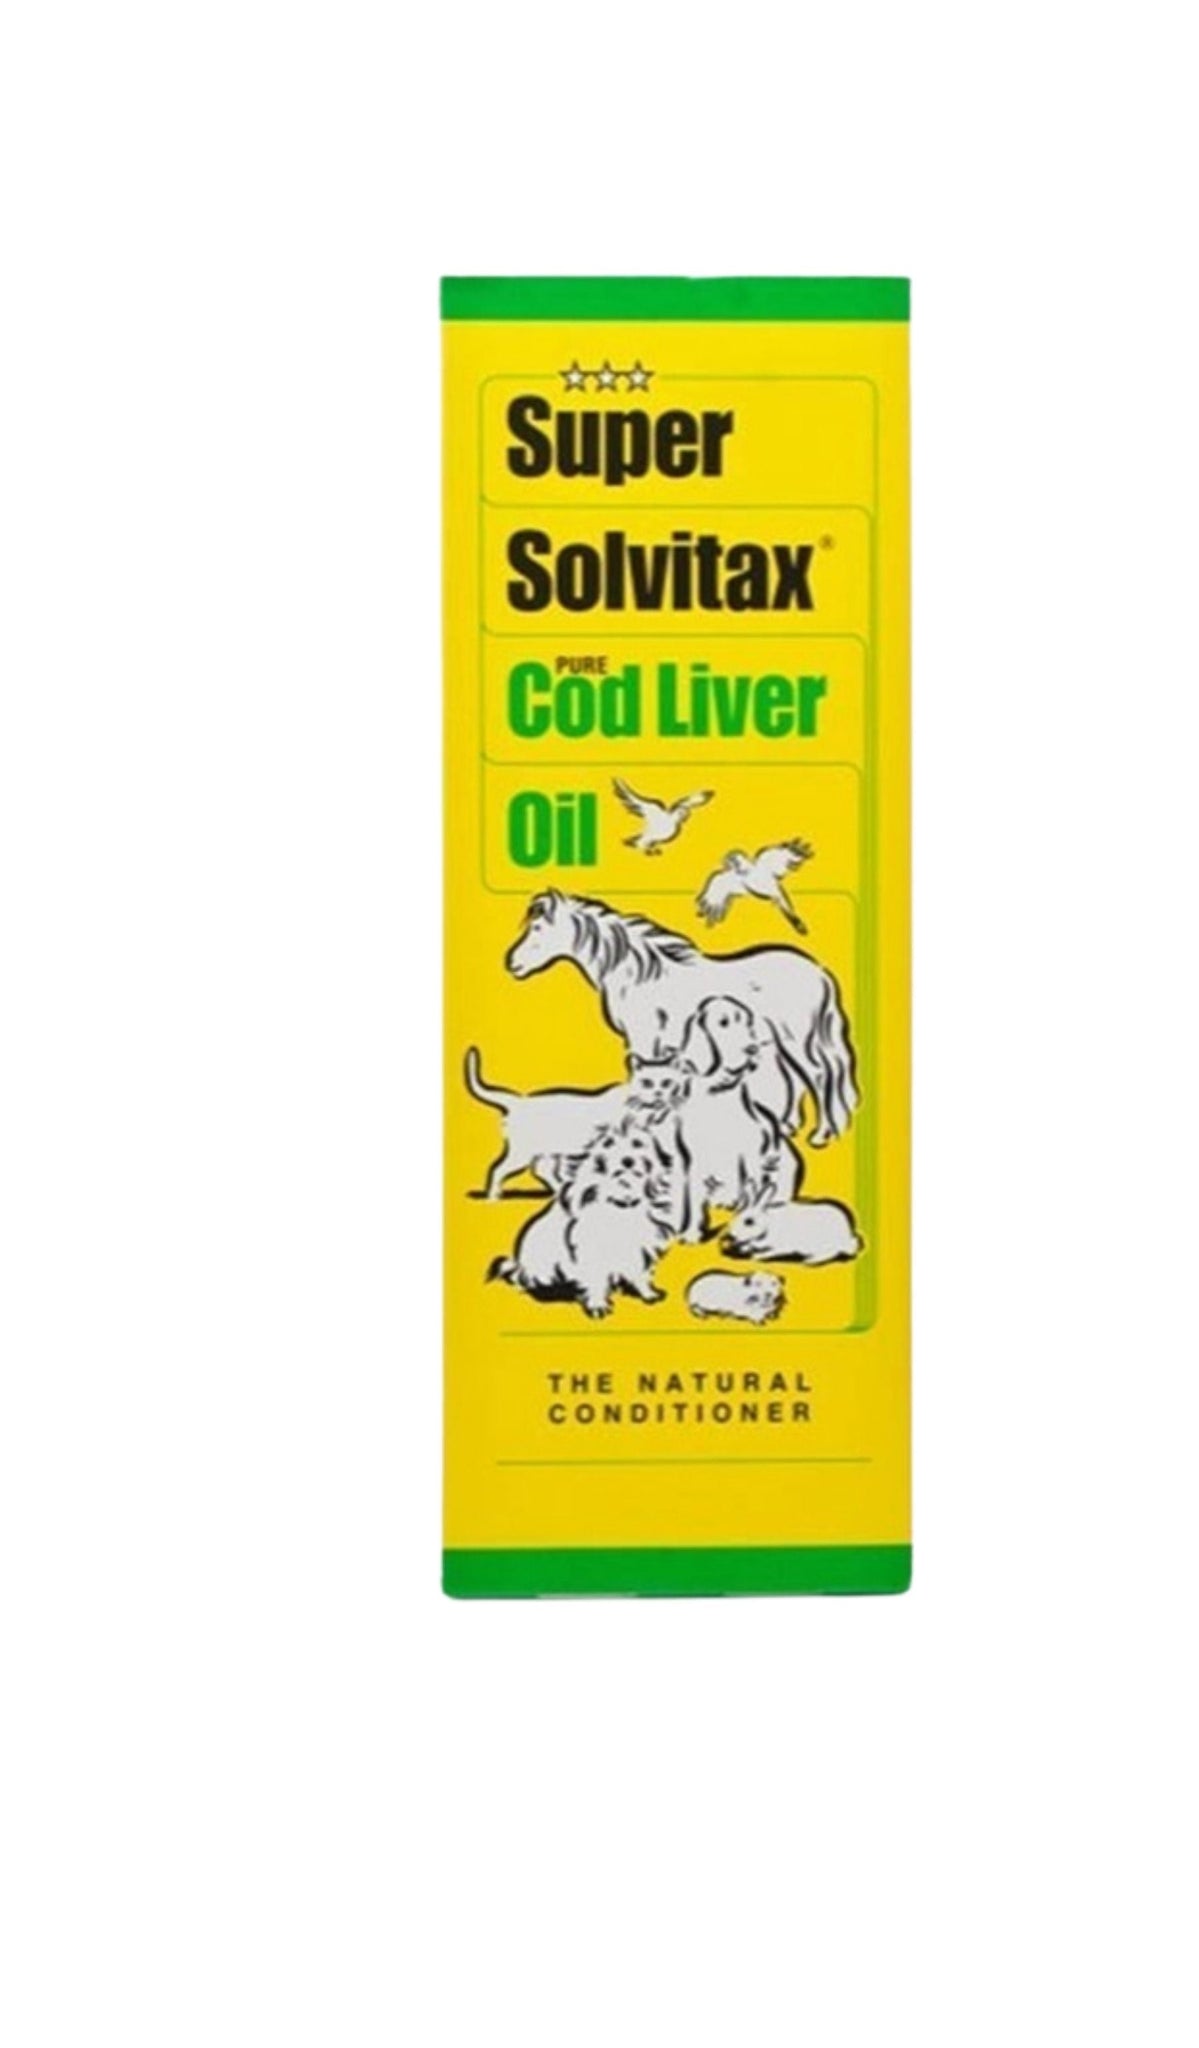 Super Solvitax Cod Liver Oil 150ml petbay.lk